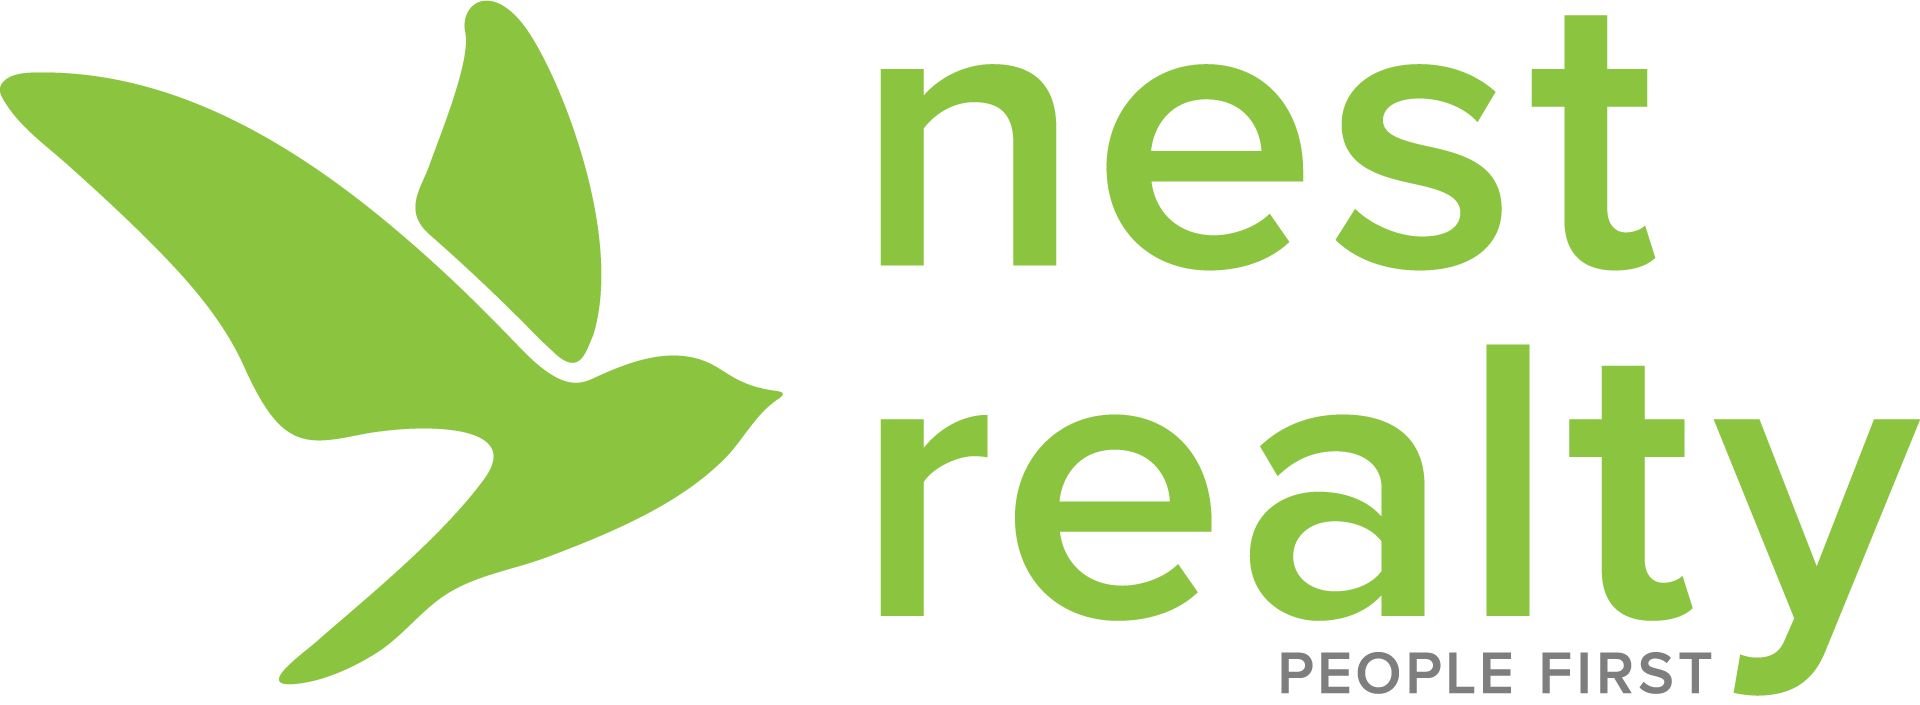 Nest Realty